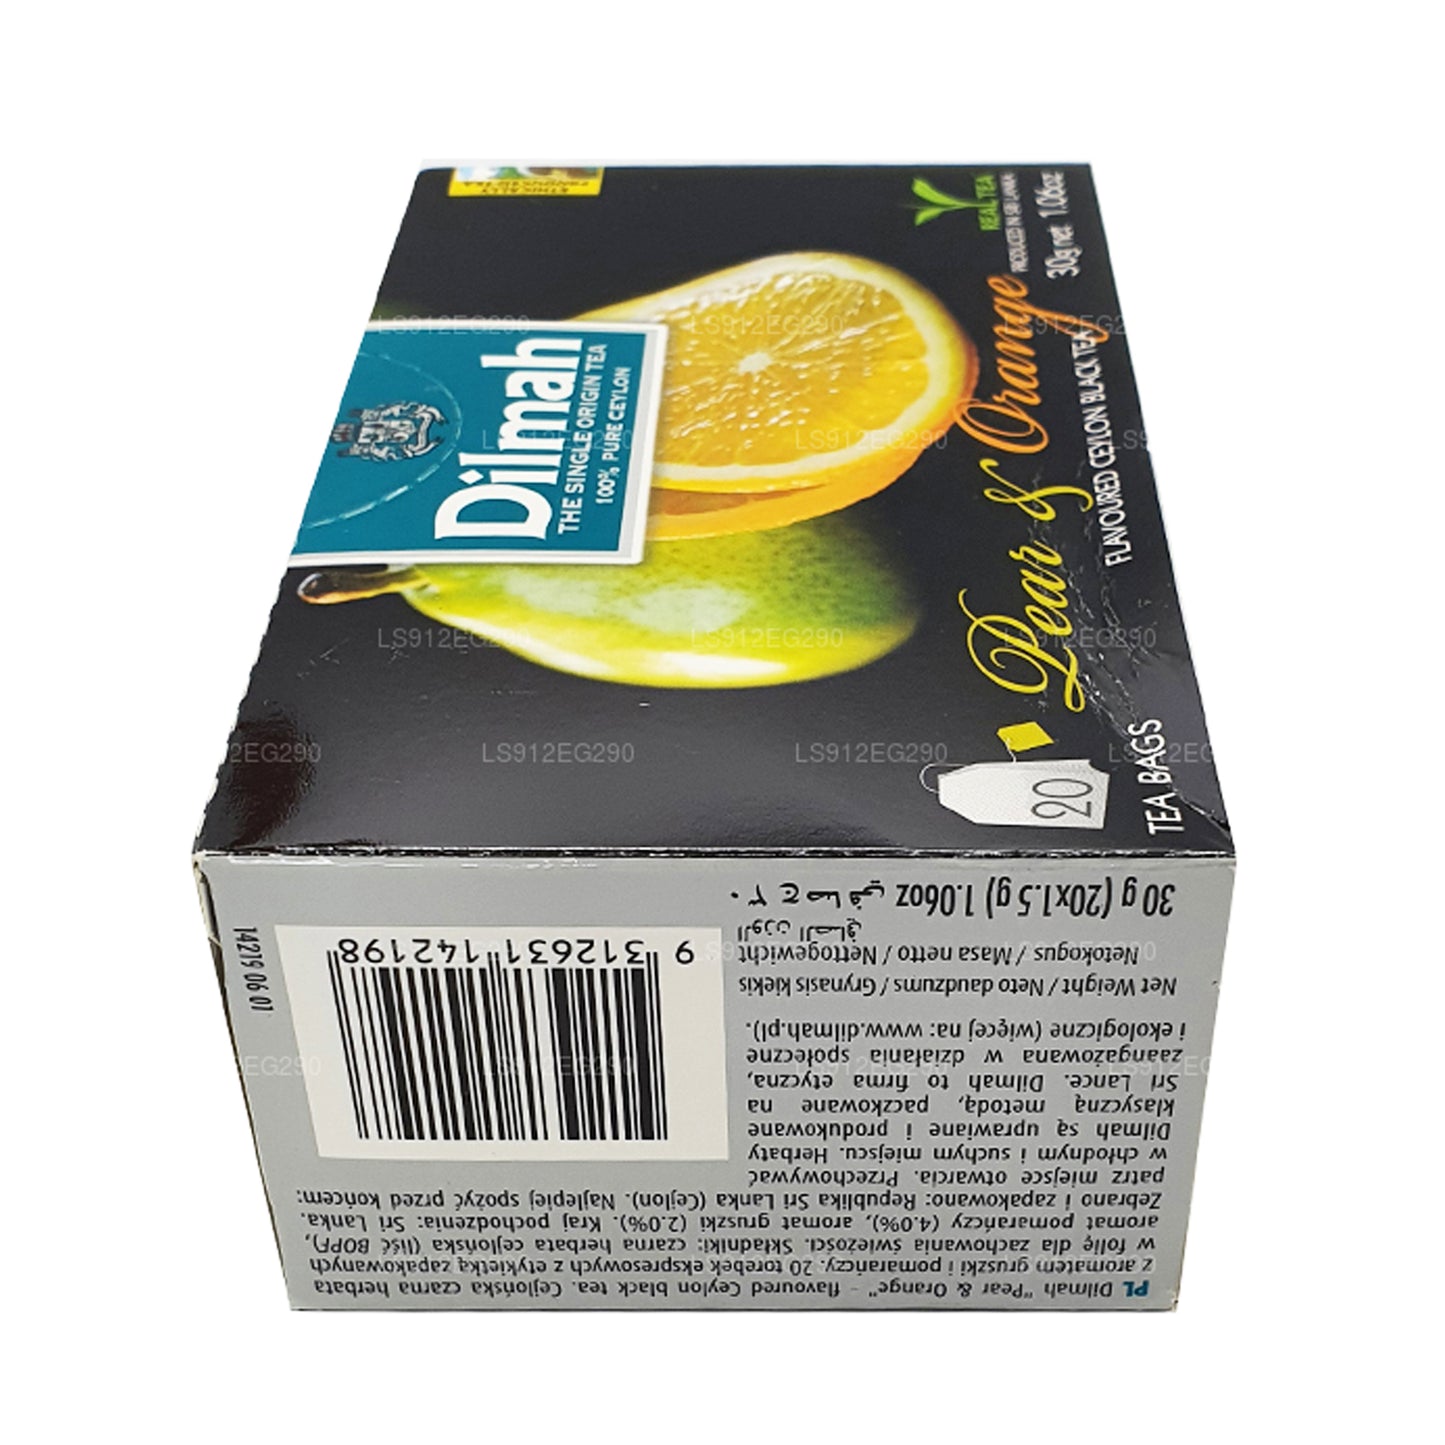 Dilmah Pear and Orange Flavored Ceylon Black Tea (30g) 20 Tea Bags